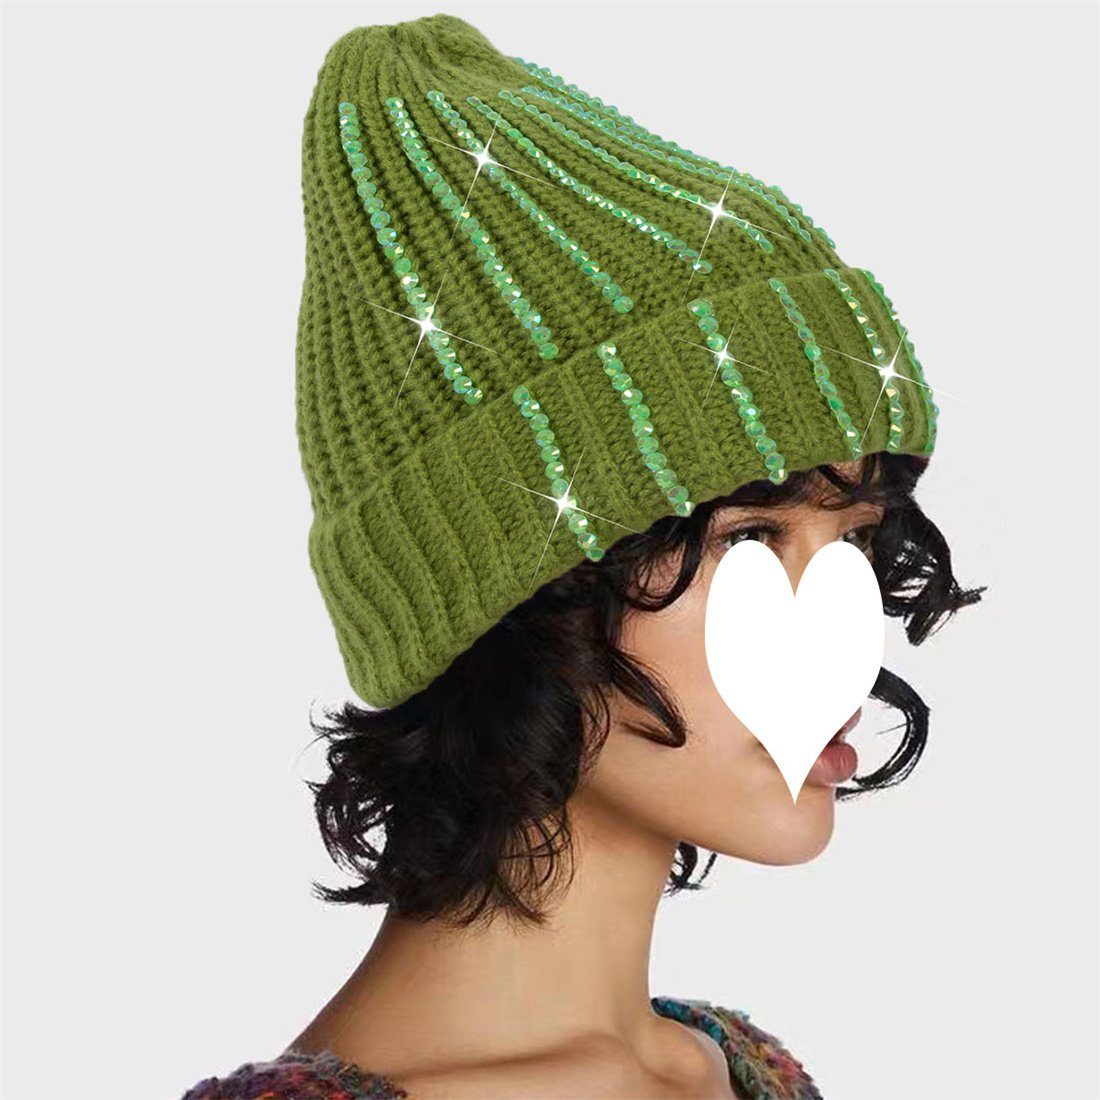 warme DÖRÖY Winter Strickmütze grün Damen warme Wollmütze Strickmütze, Outdoor-Mode verdickt